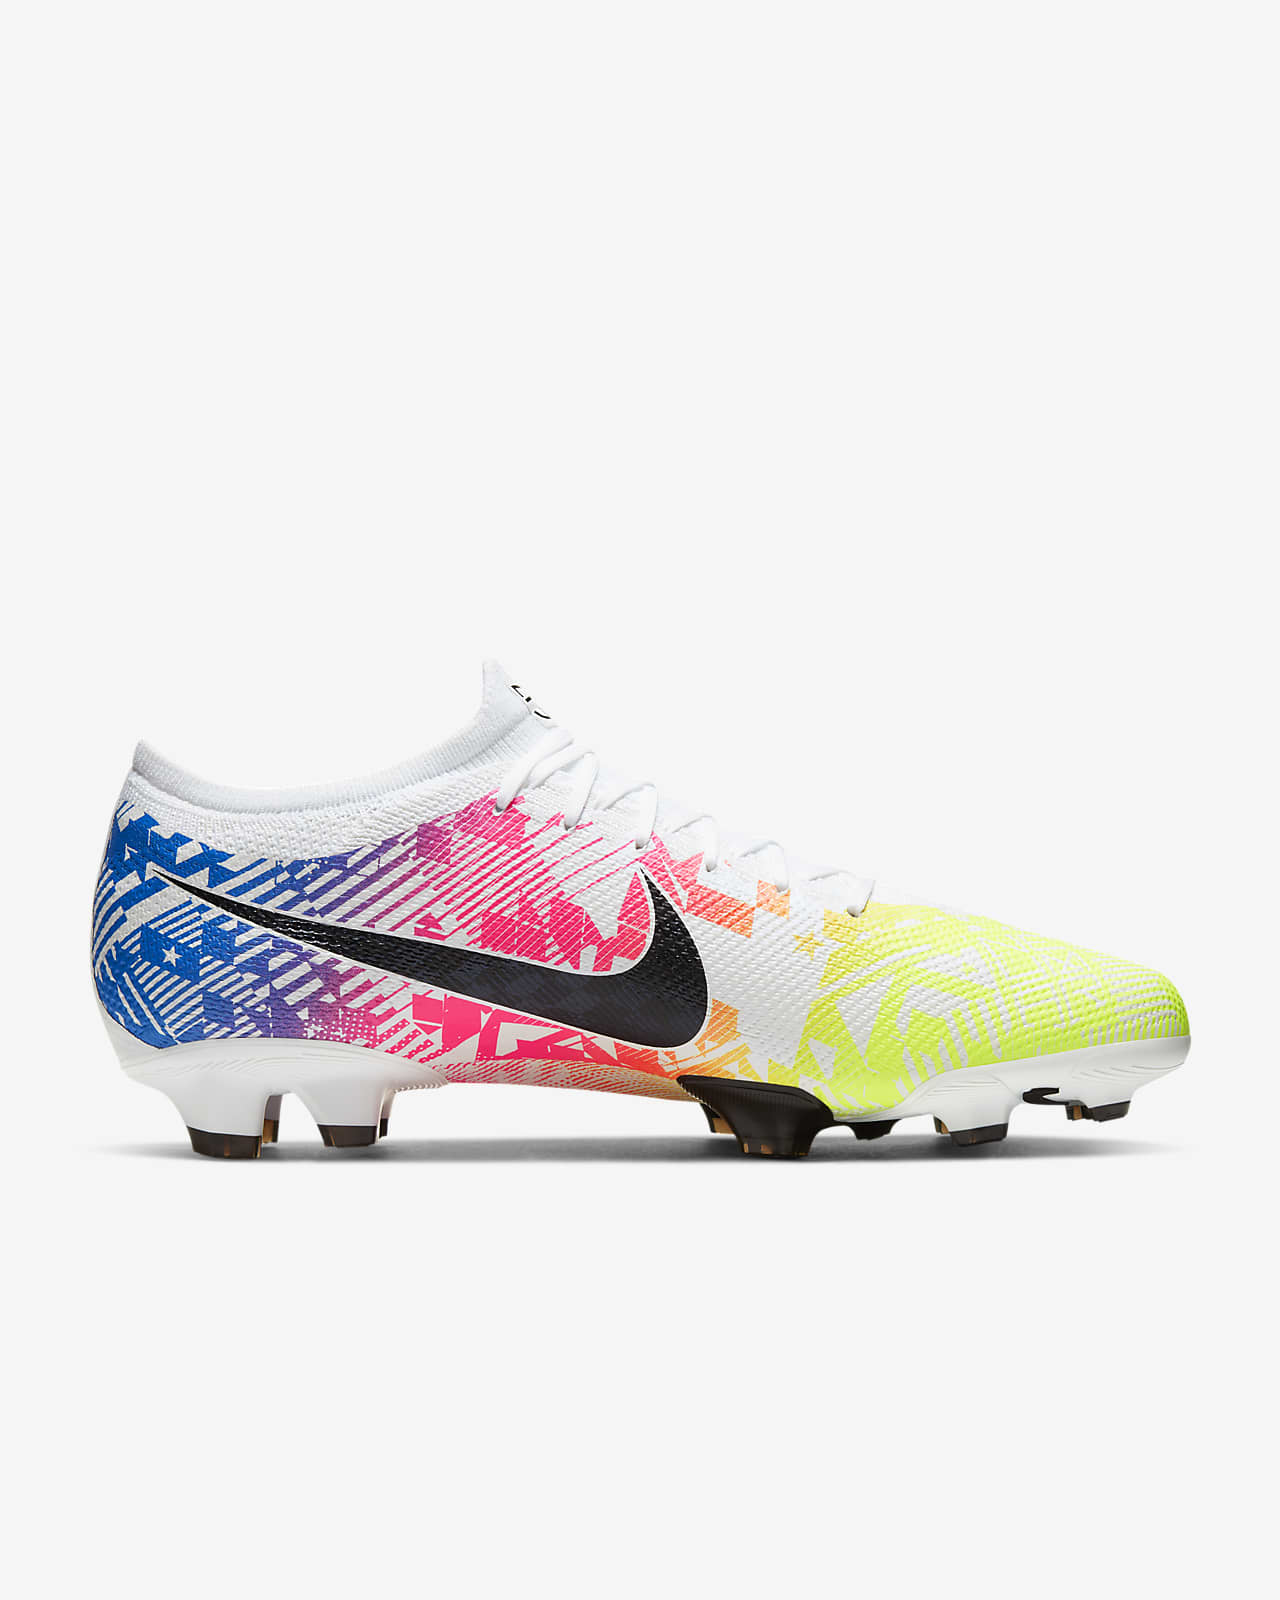 neymar soccer shoes 219